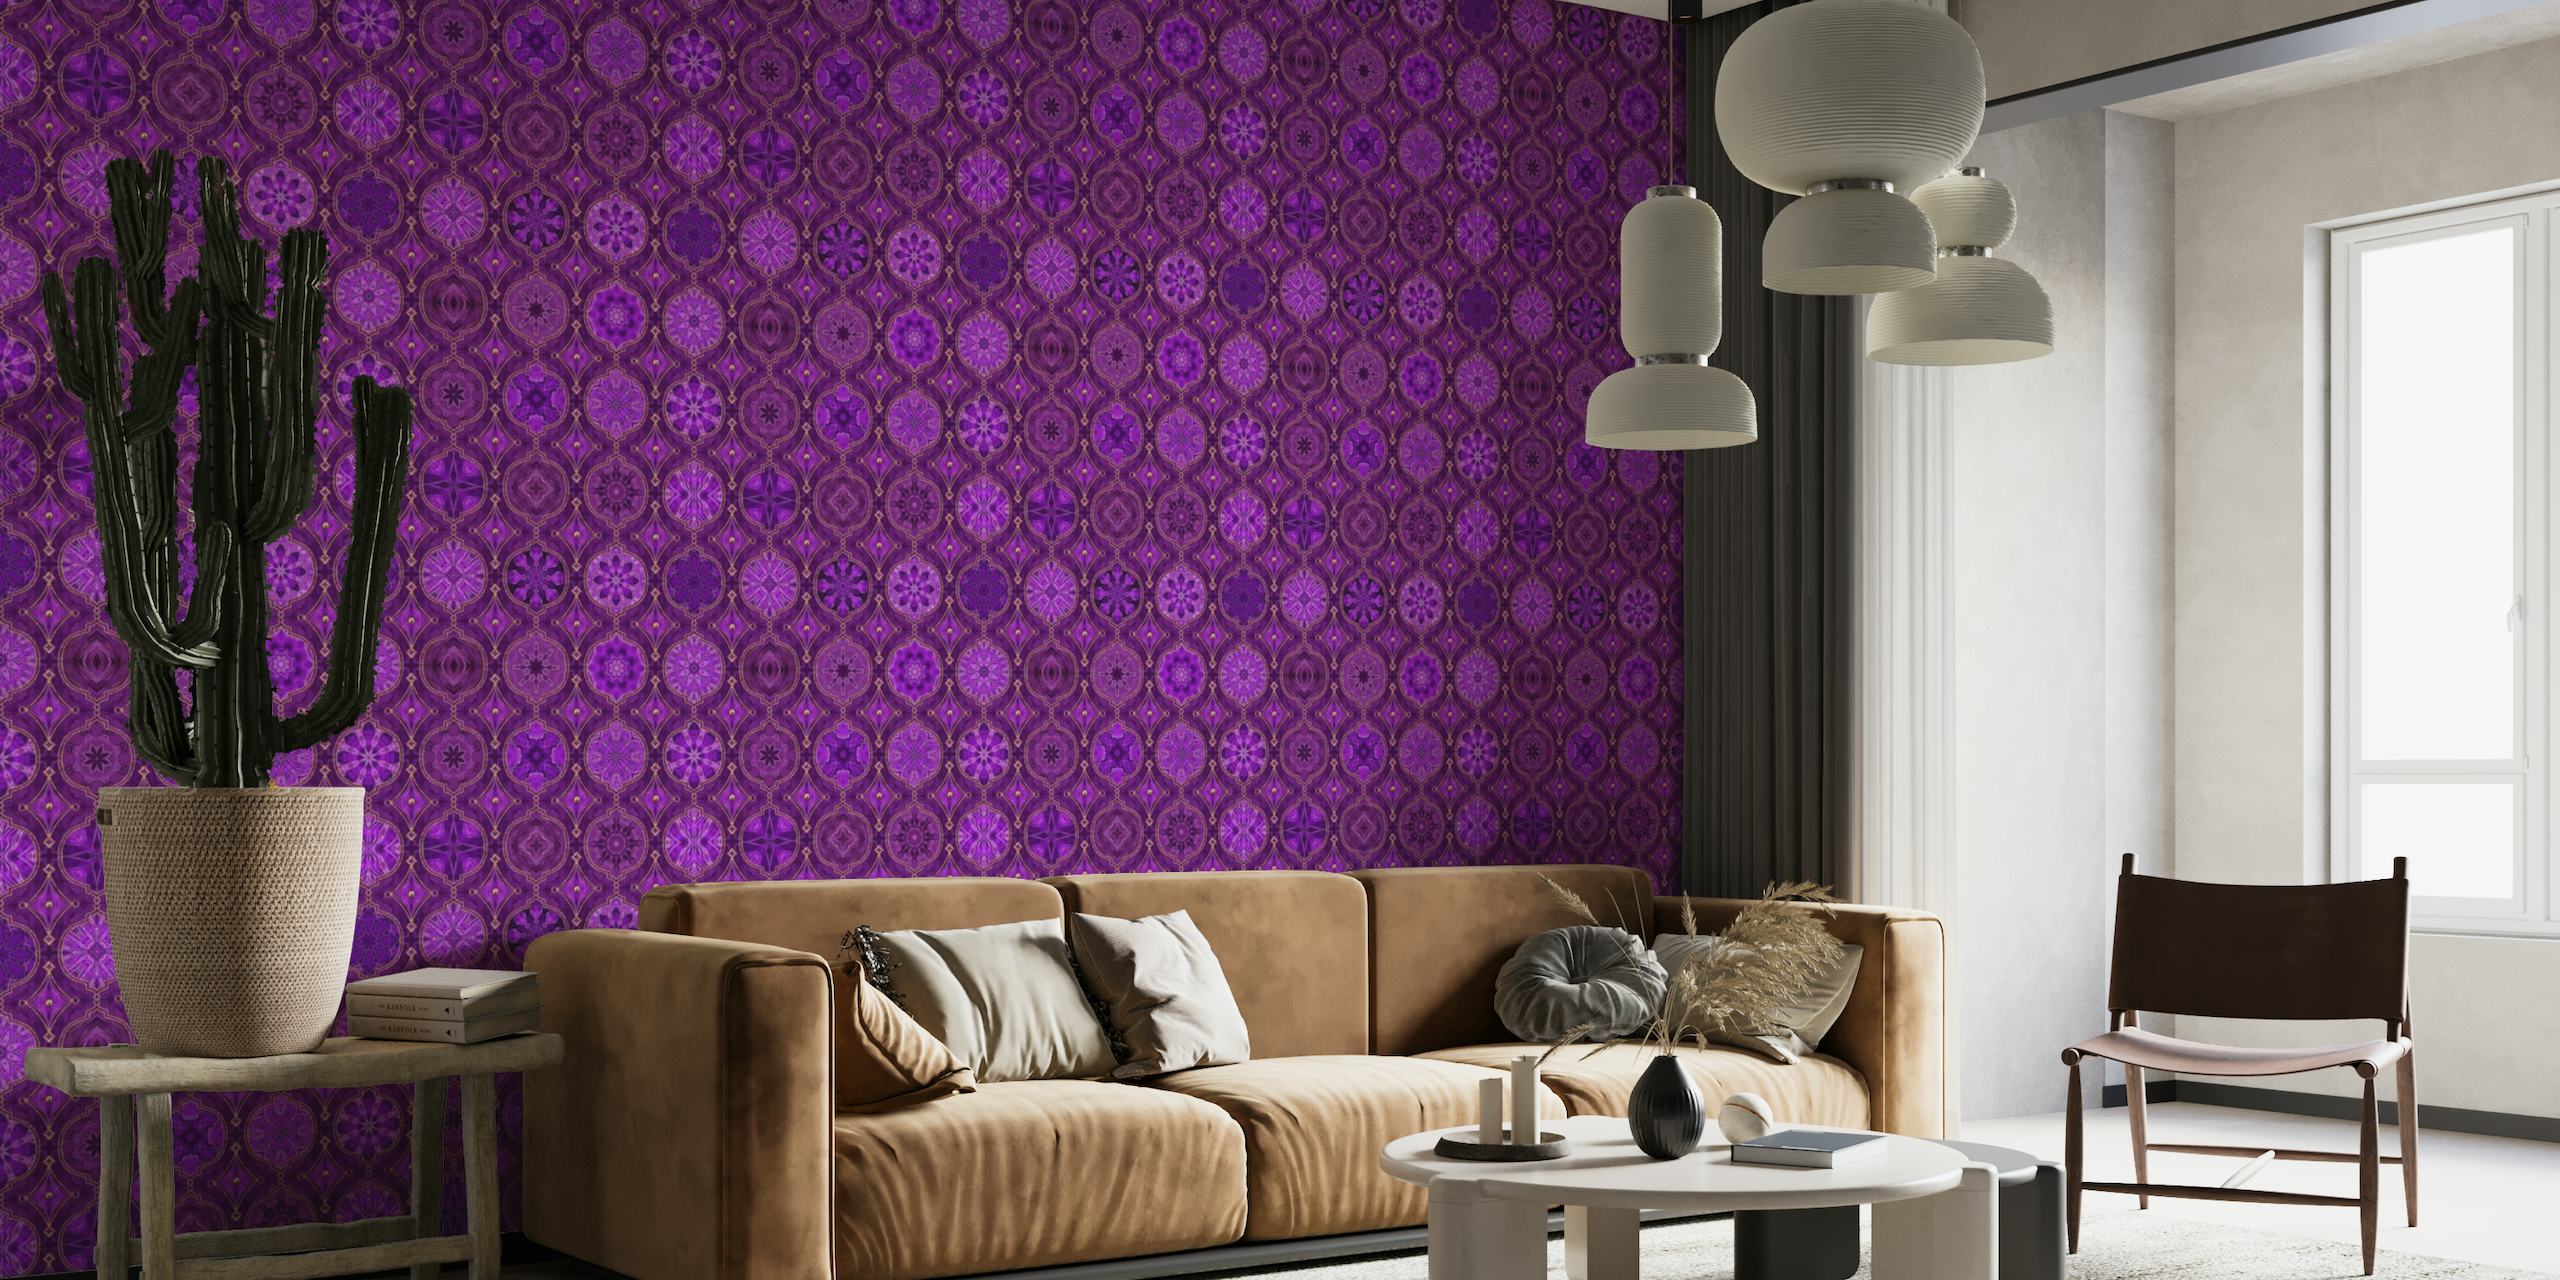 Treasures of Morocco Oriental Tile Design Fuchsia Purple Gold papel pintado